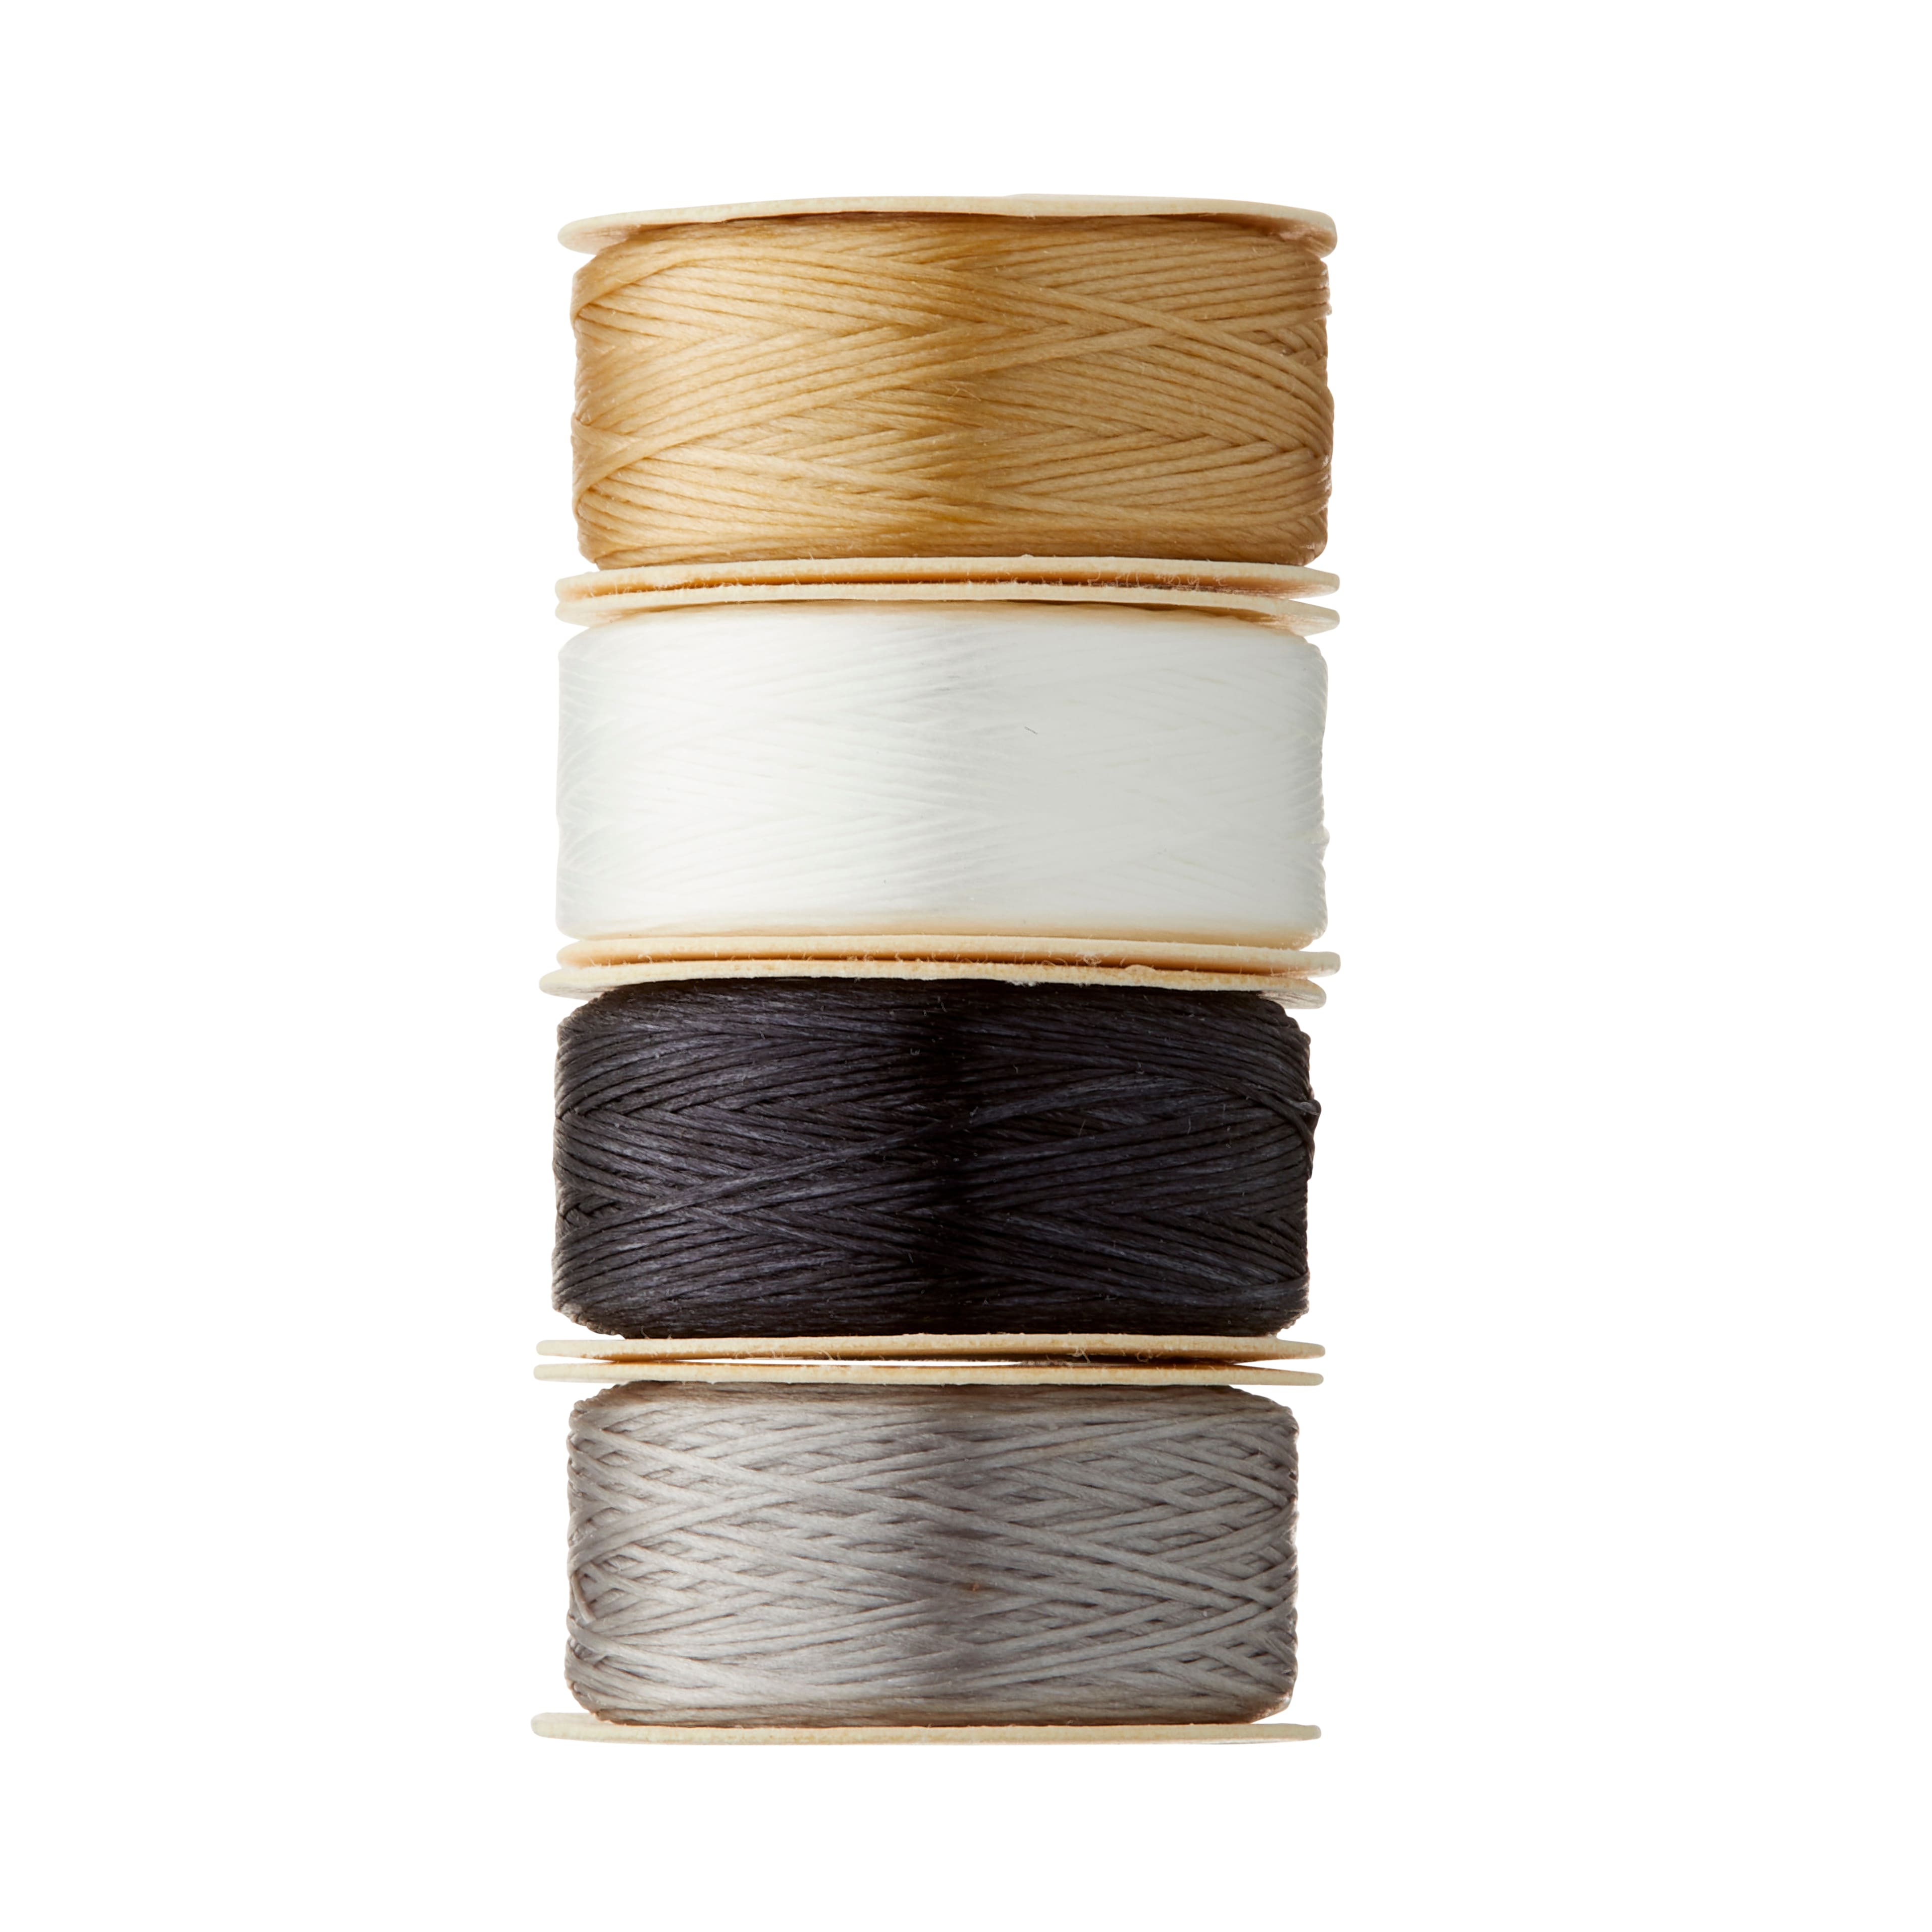 Thread, Nymo®, nylon, black, size B. Sold per 72-yard bobbin. - Fire  Mountain Gems and Beads